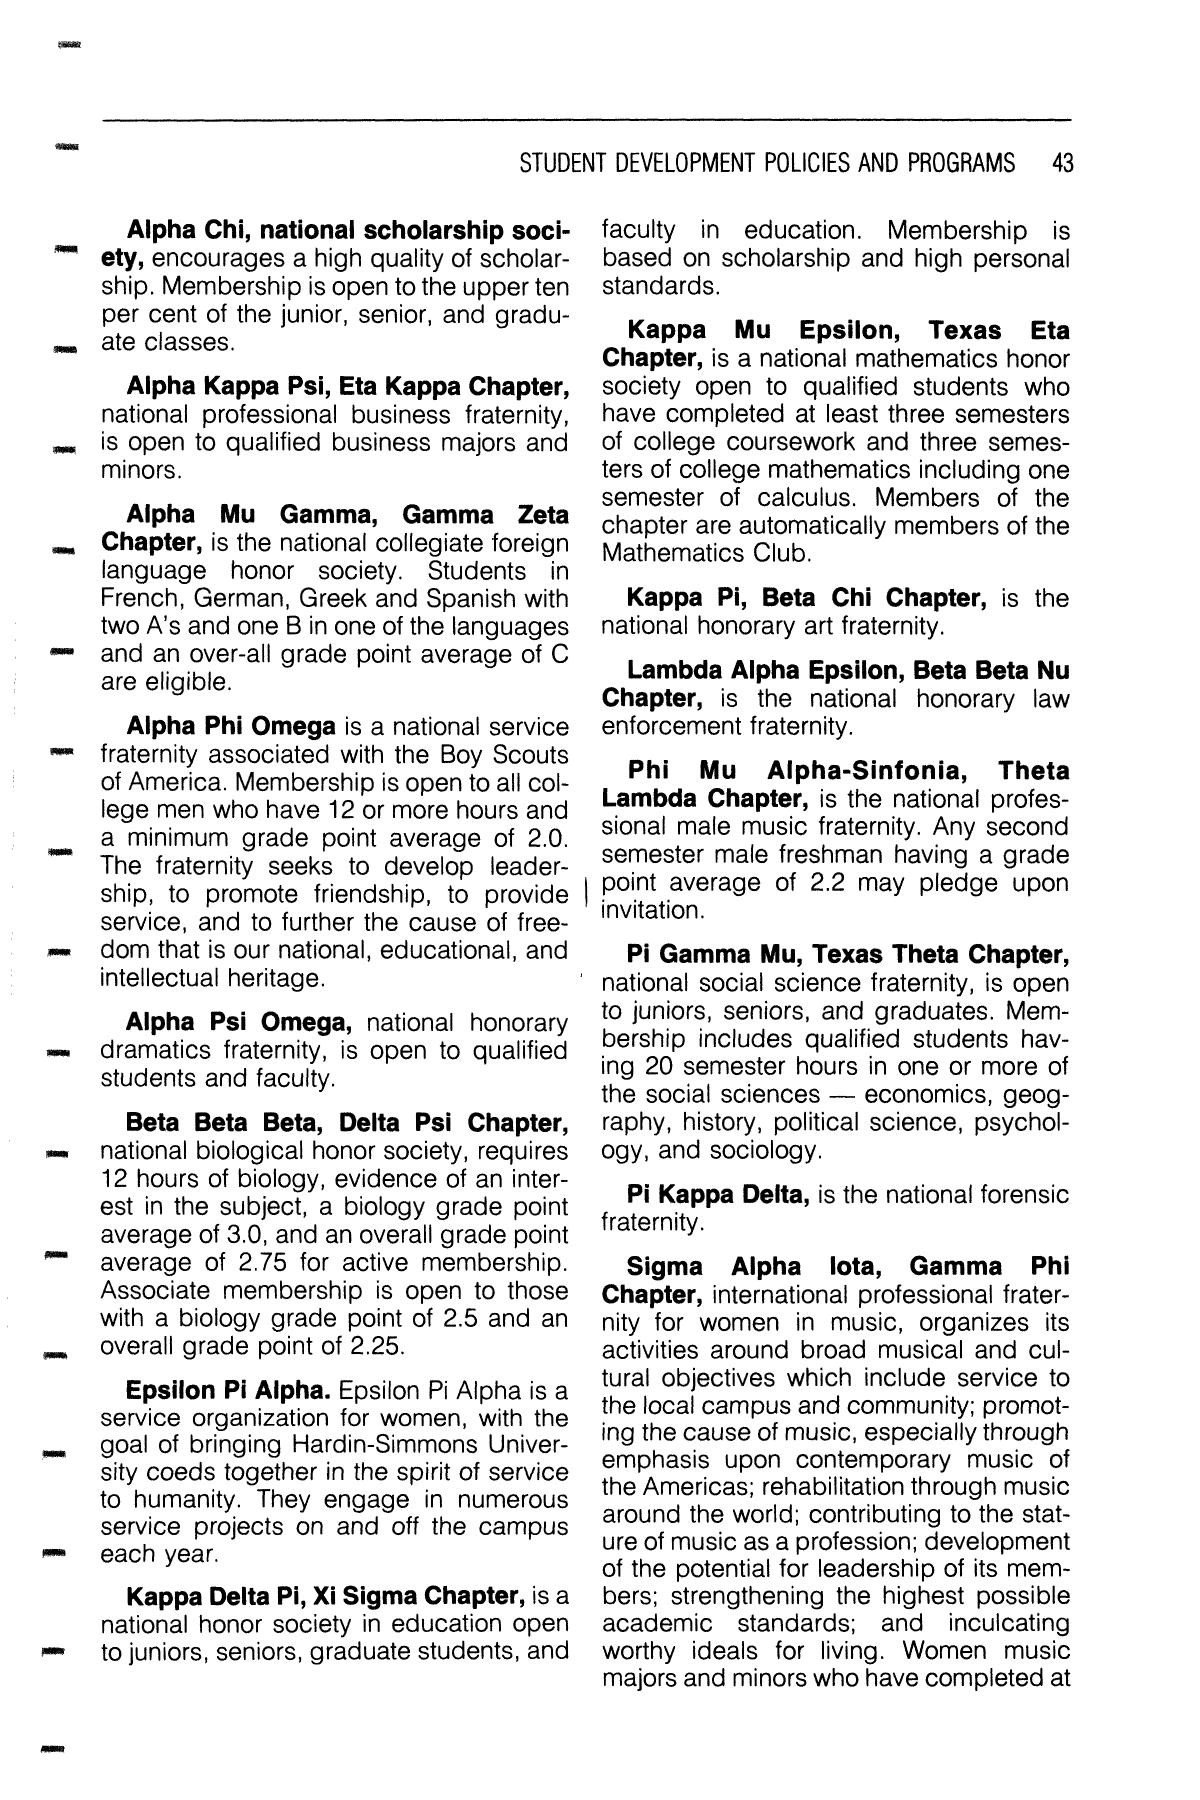 Catalog of Hardin-Simmons University, 1985-1986 Undergraduate Bulletin
                                                
                                                    43
                                                